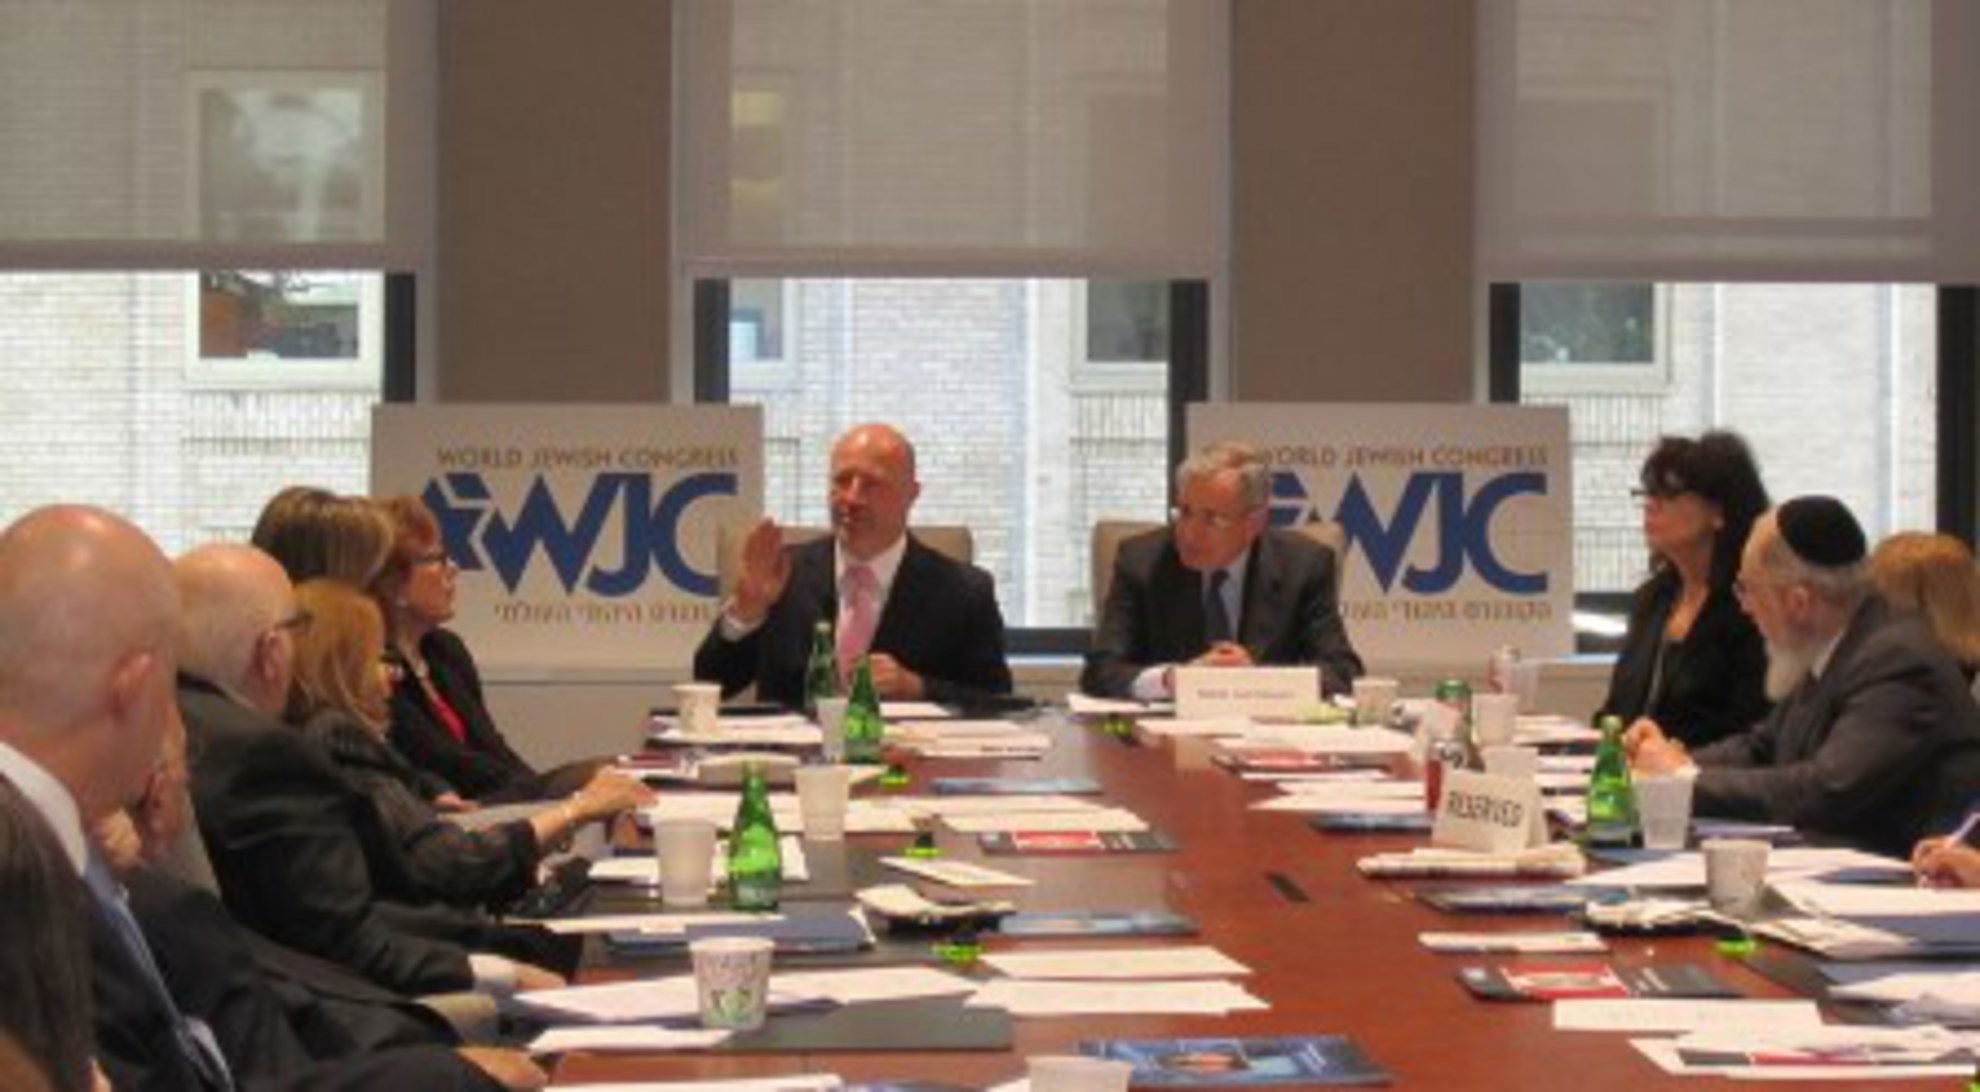 WJC US Annual Meeting